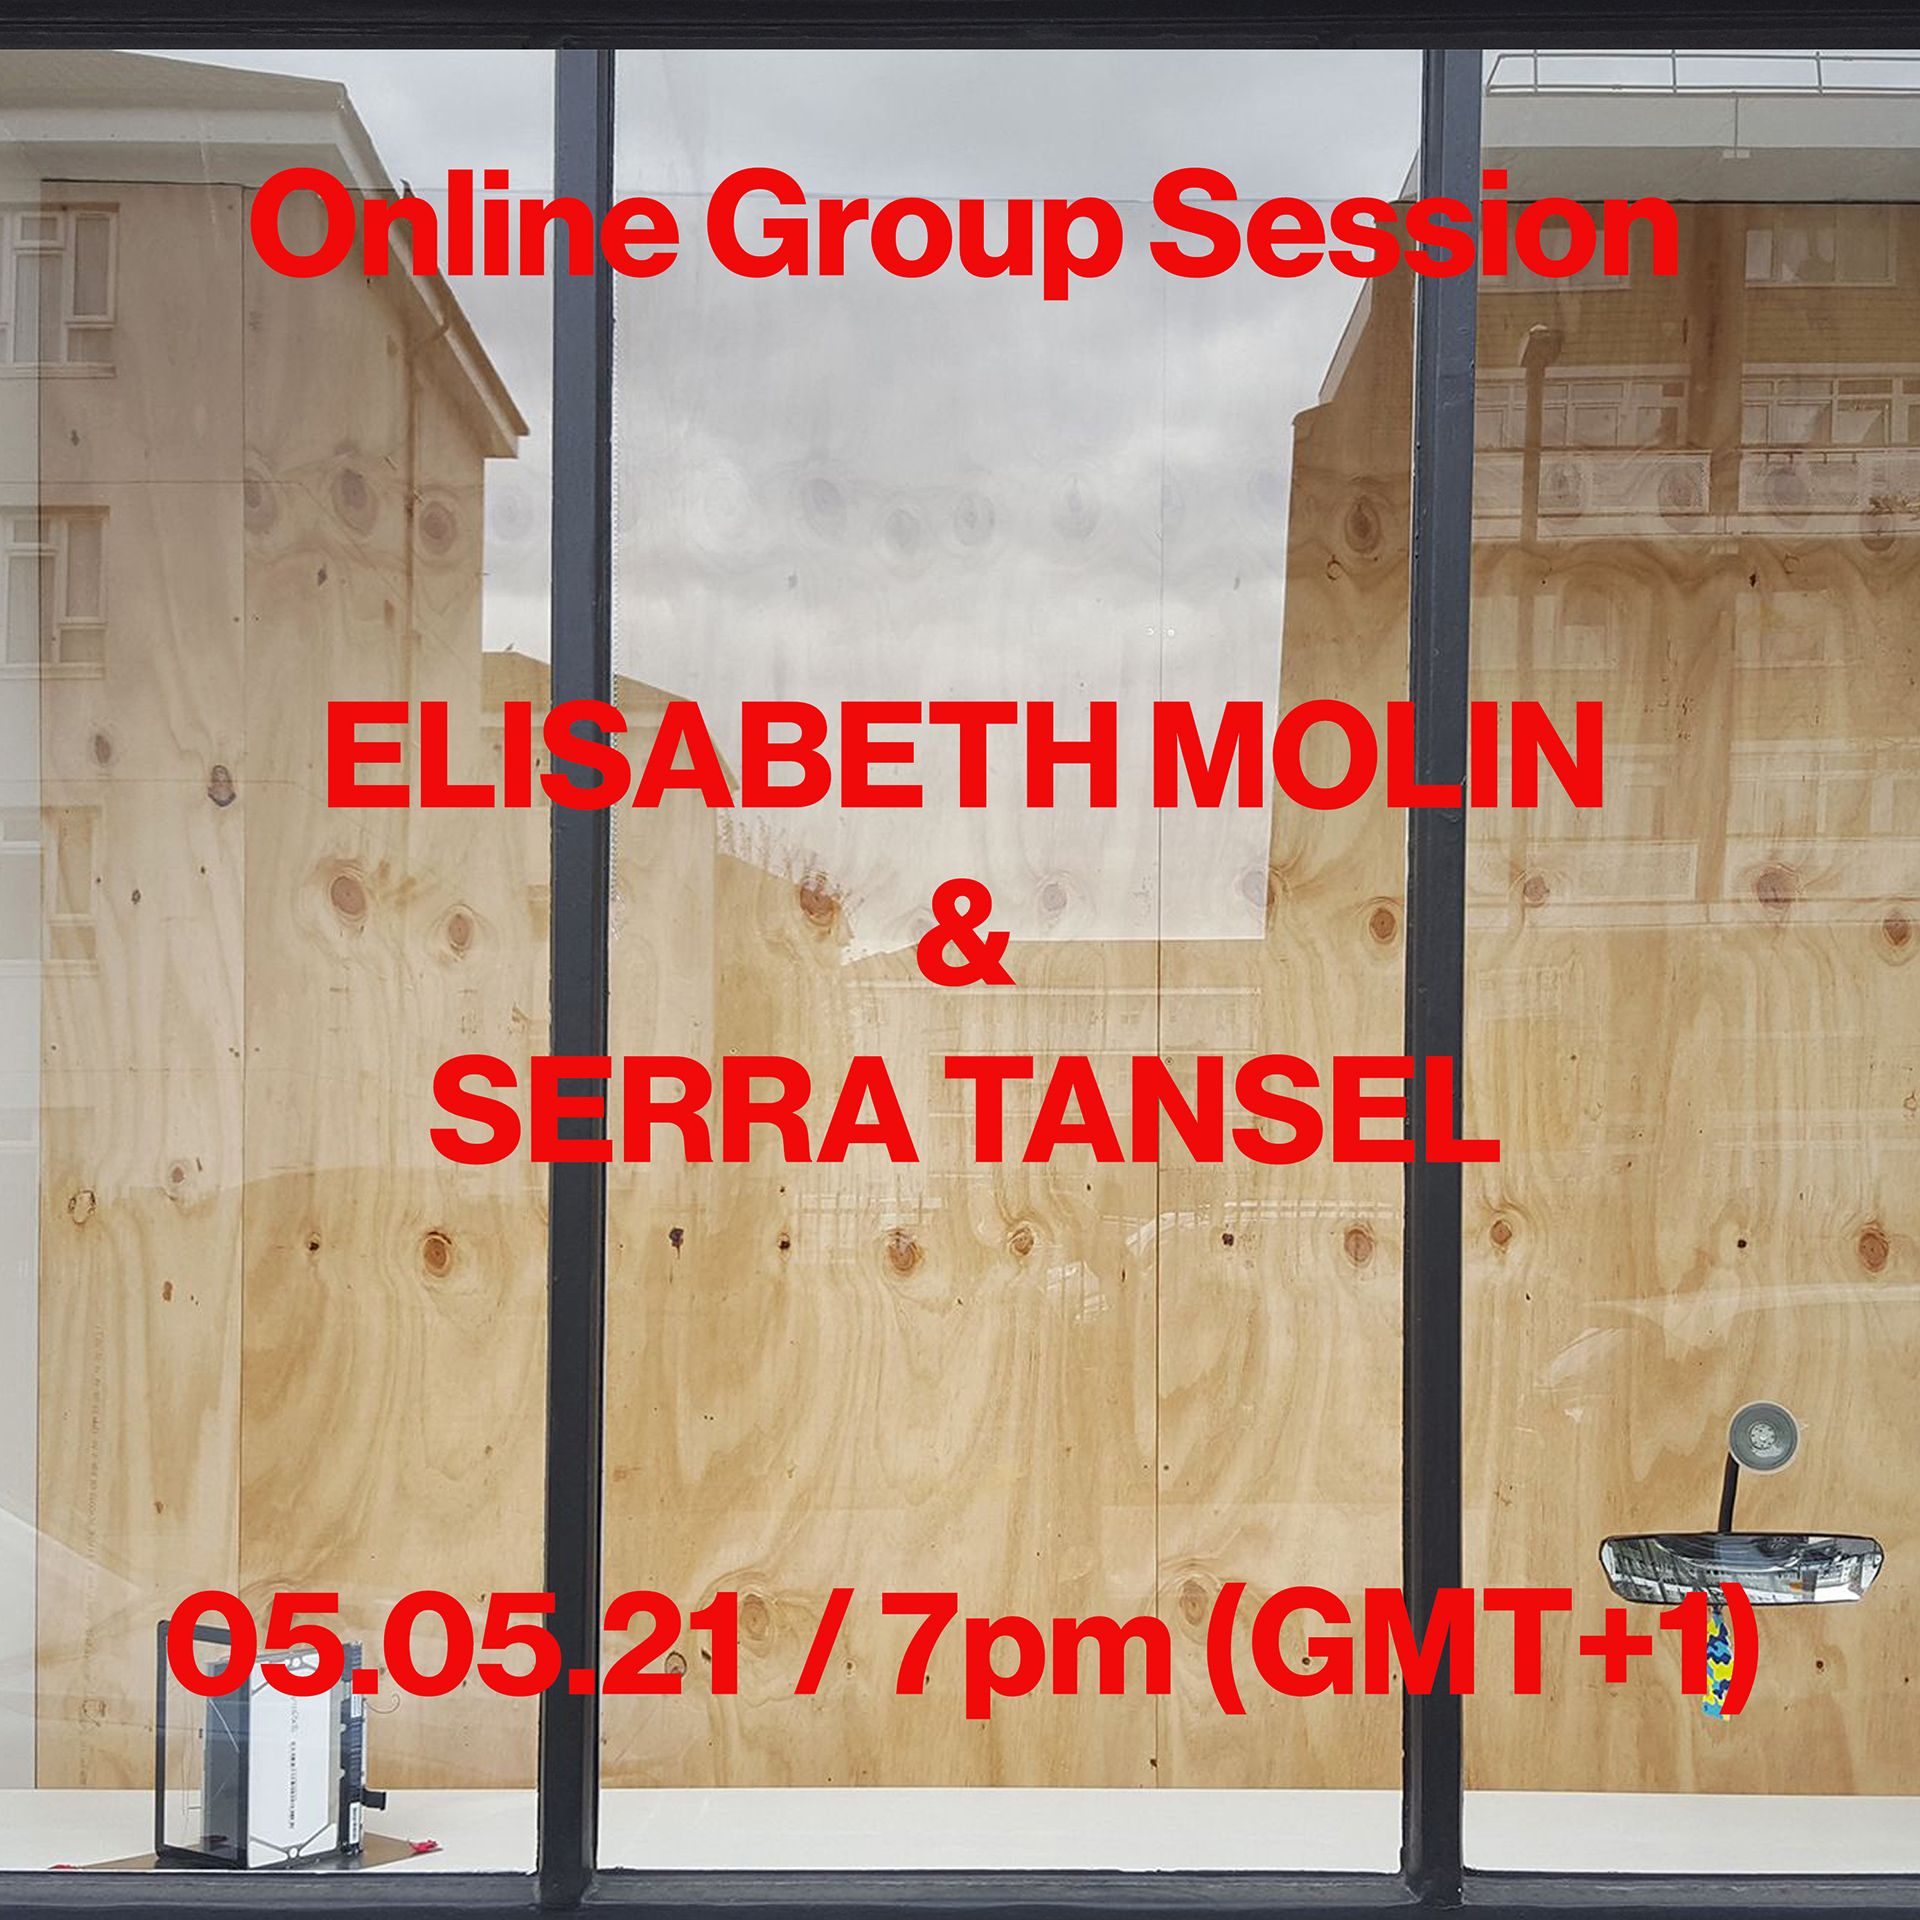 Online Group Session, Elisabeth Molin, Serra Tansel